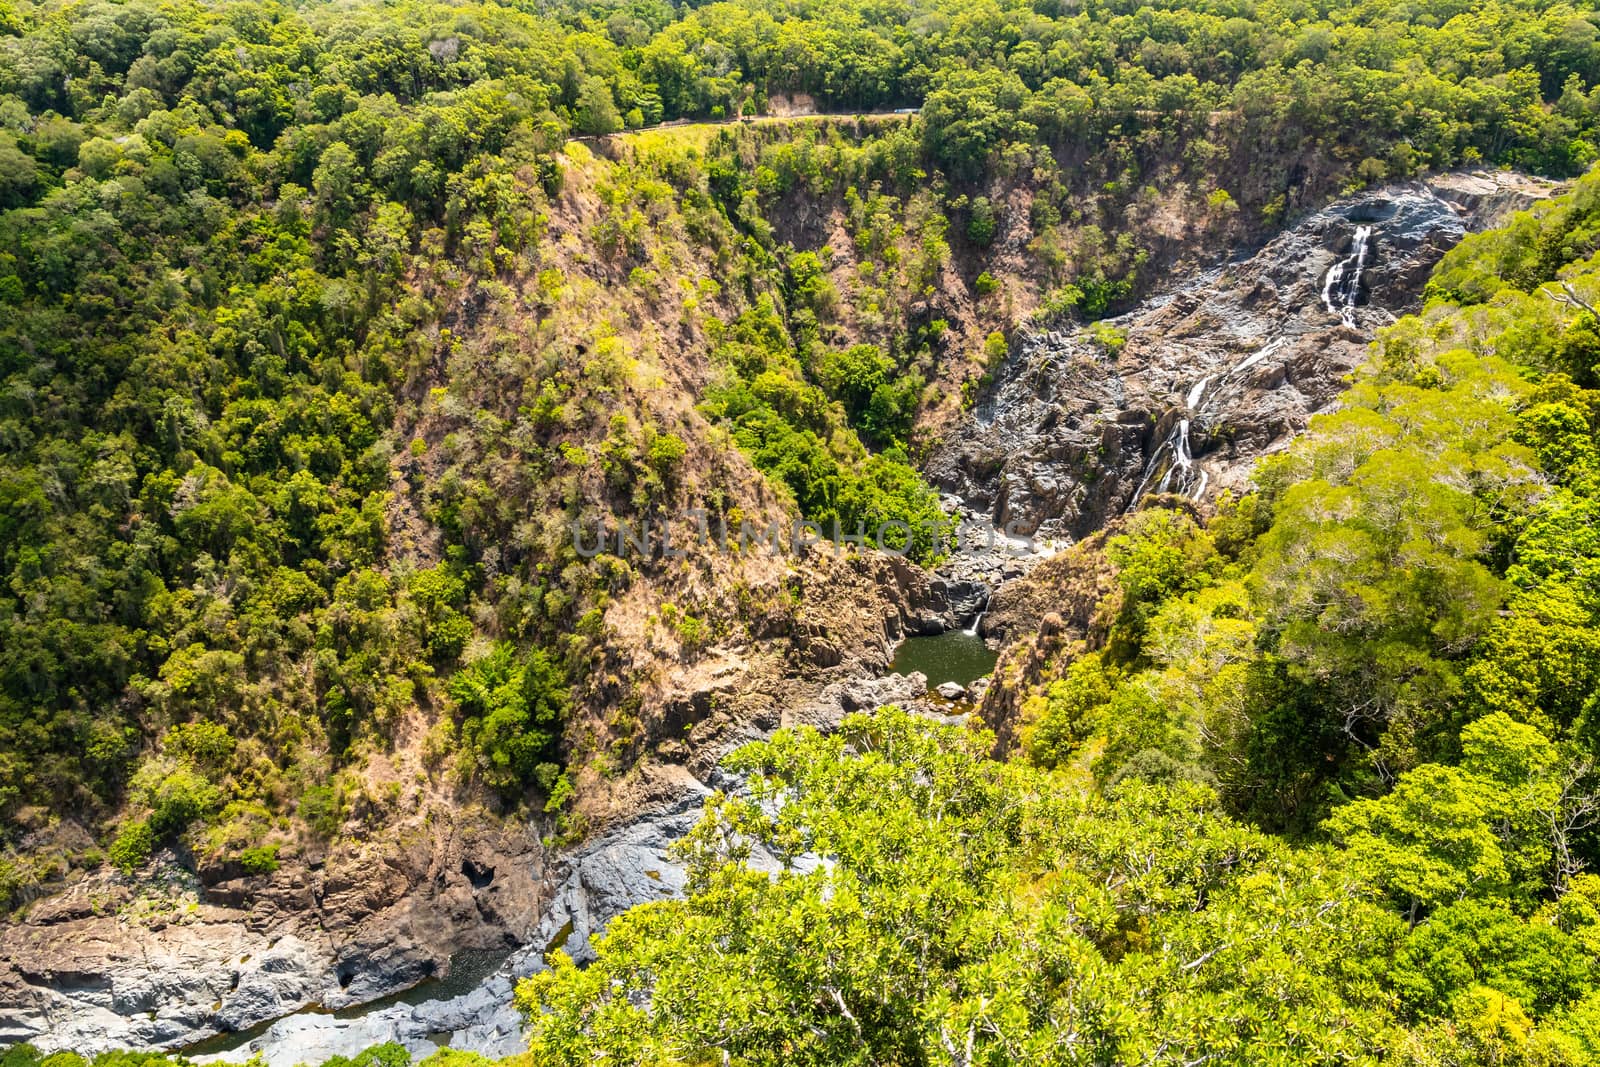 View of the Barron Falls near Kuranda in north Queensland, Australia by mauricallari